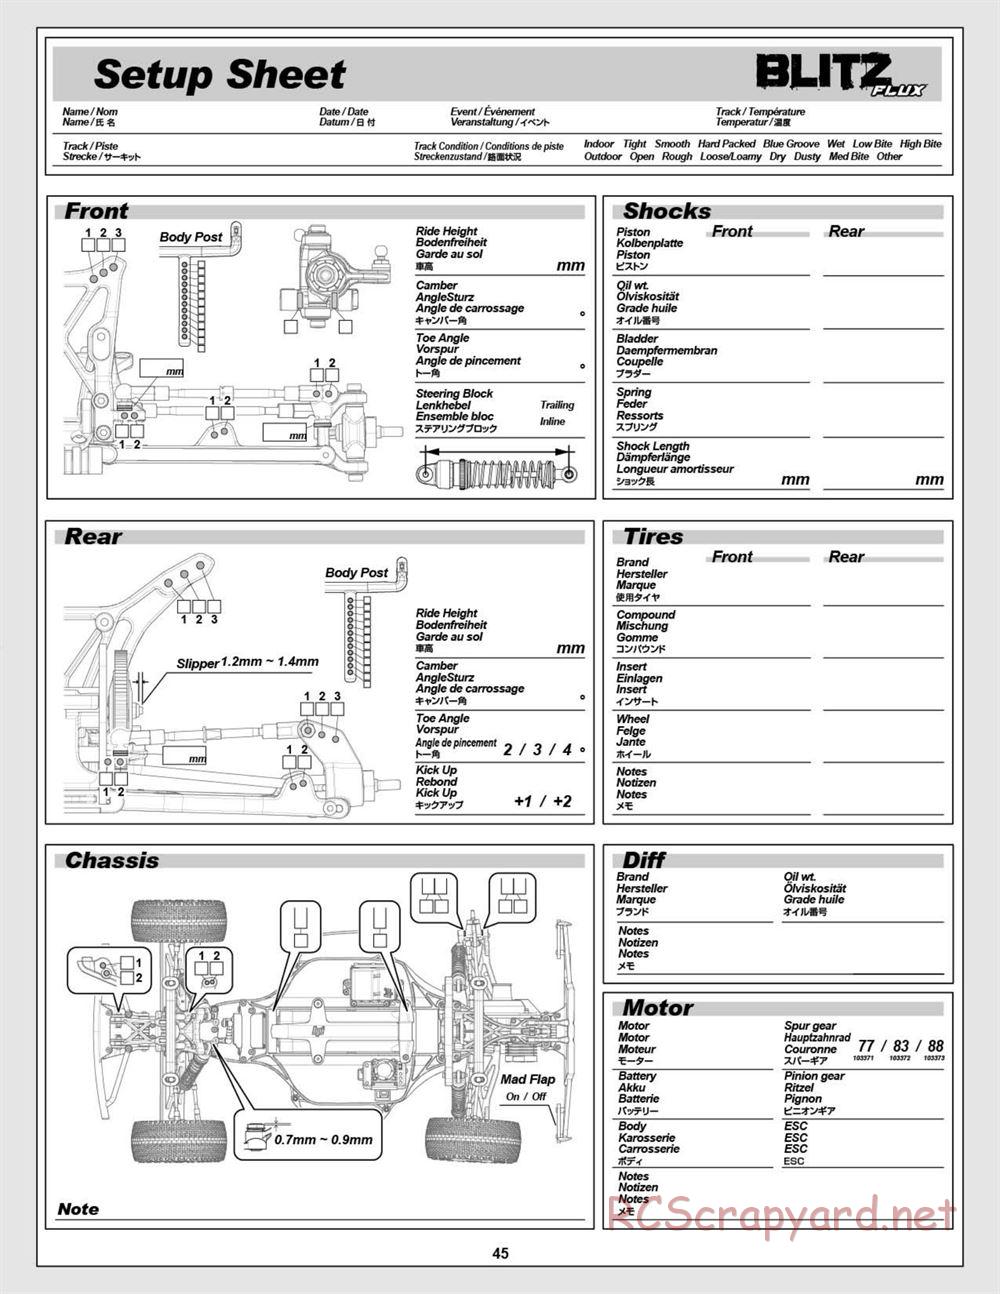 HPI - Blitz Flux - Manual - Page 45